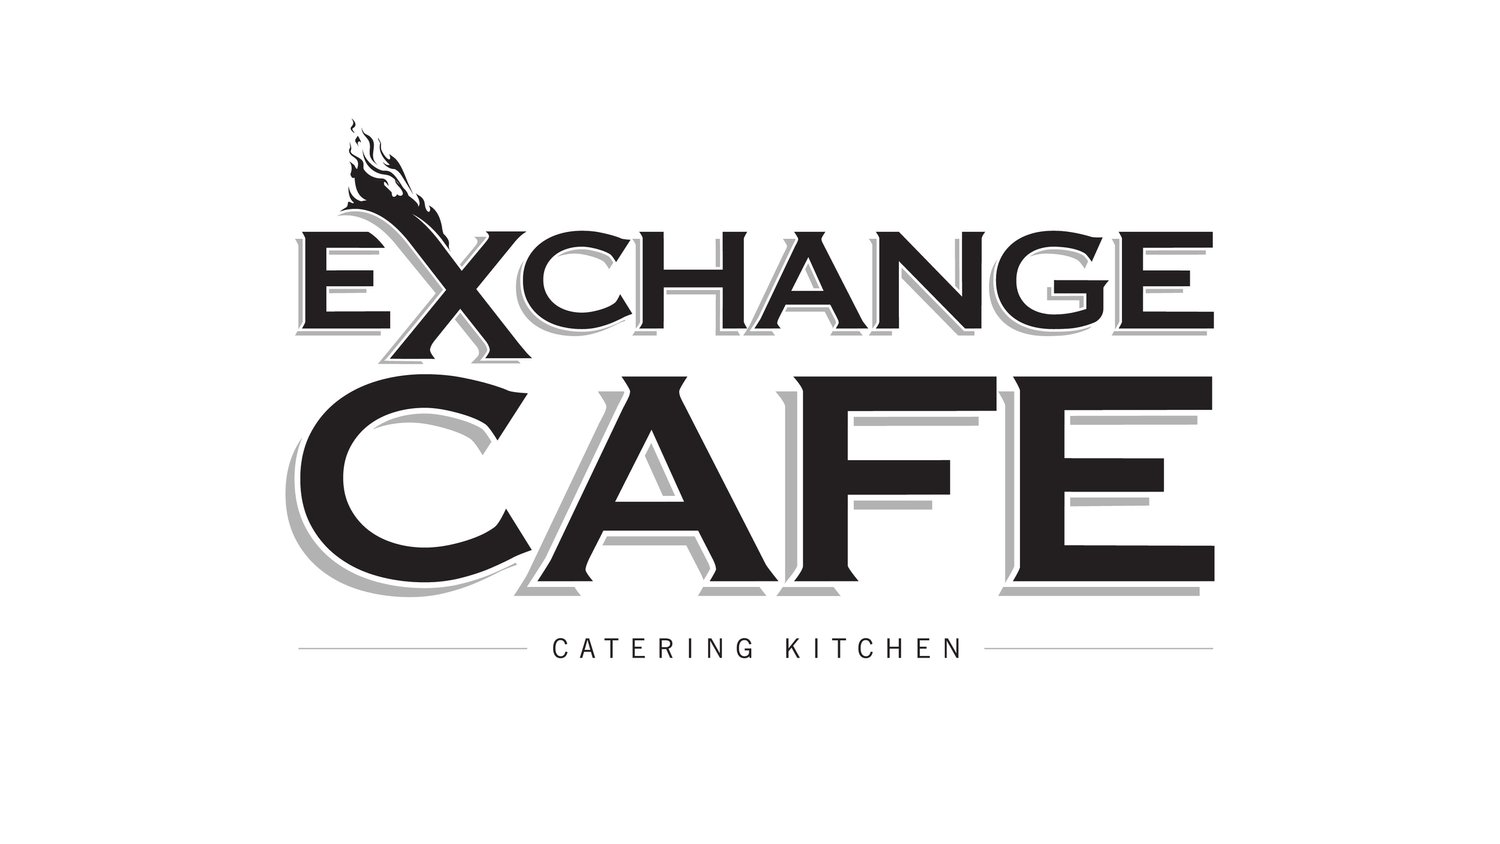 Exchange Café + Catering Kitchen